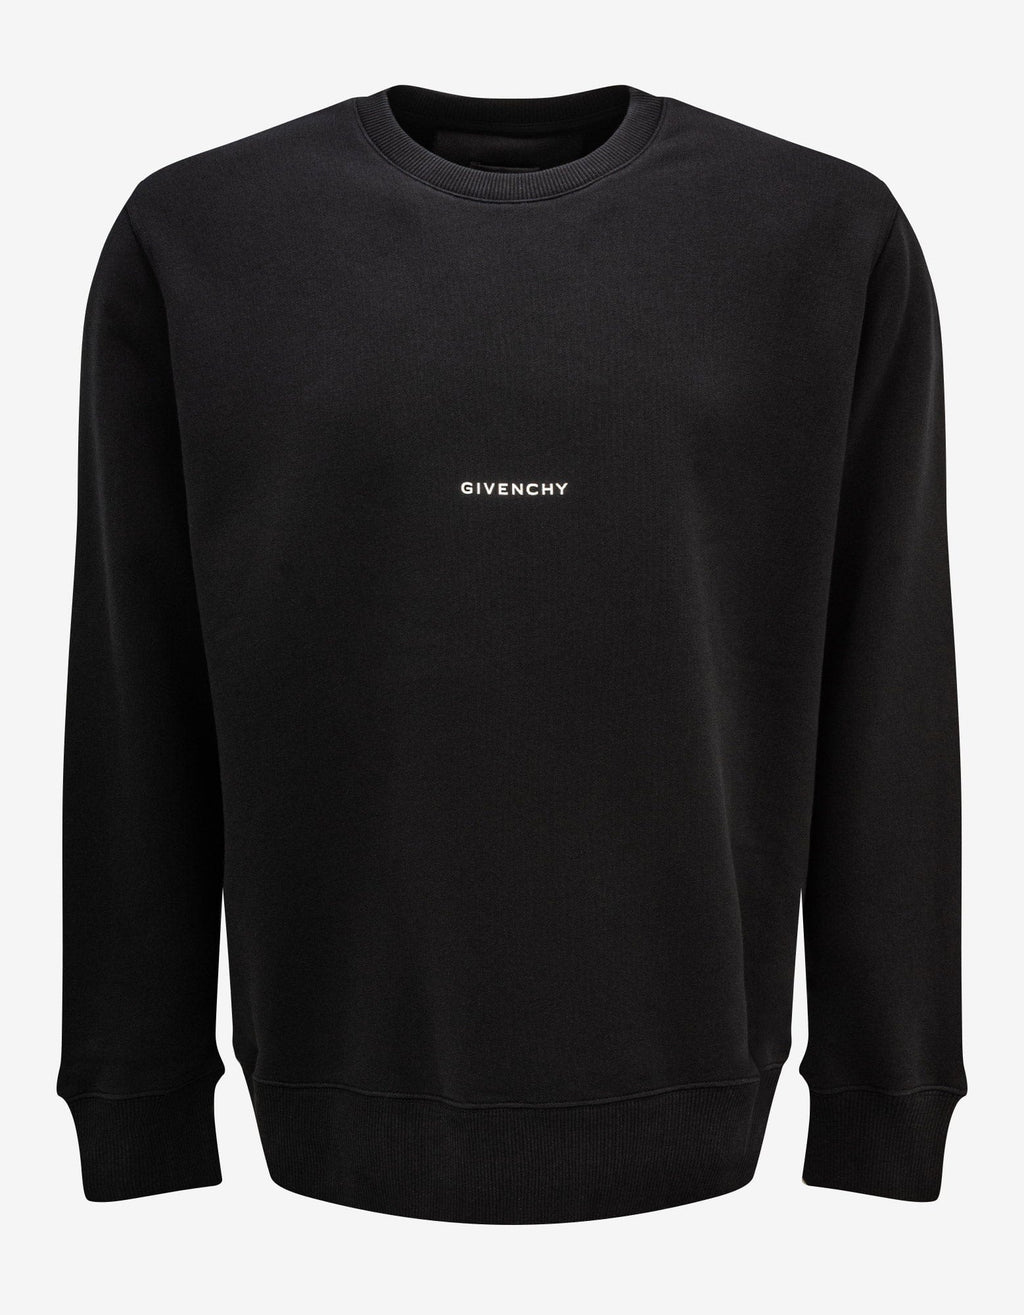 Givenchy Givenchy Black Cross Logo Sweatshirt